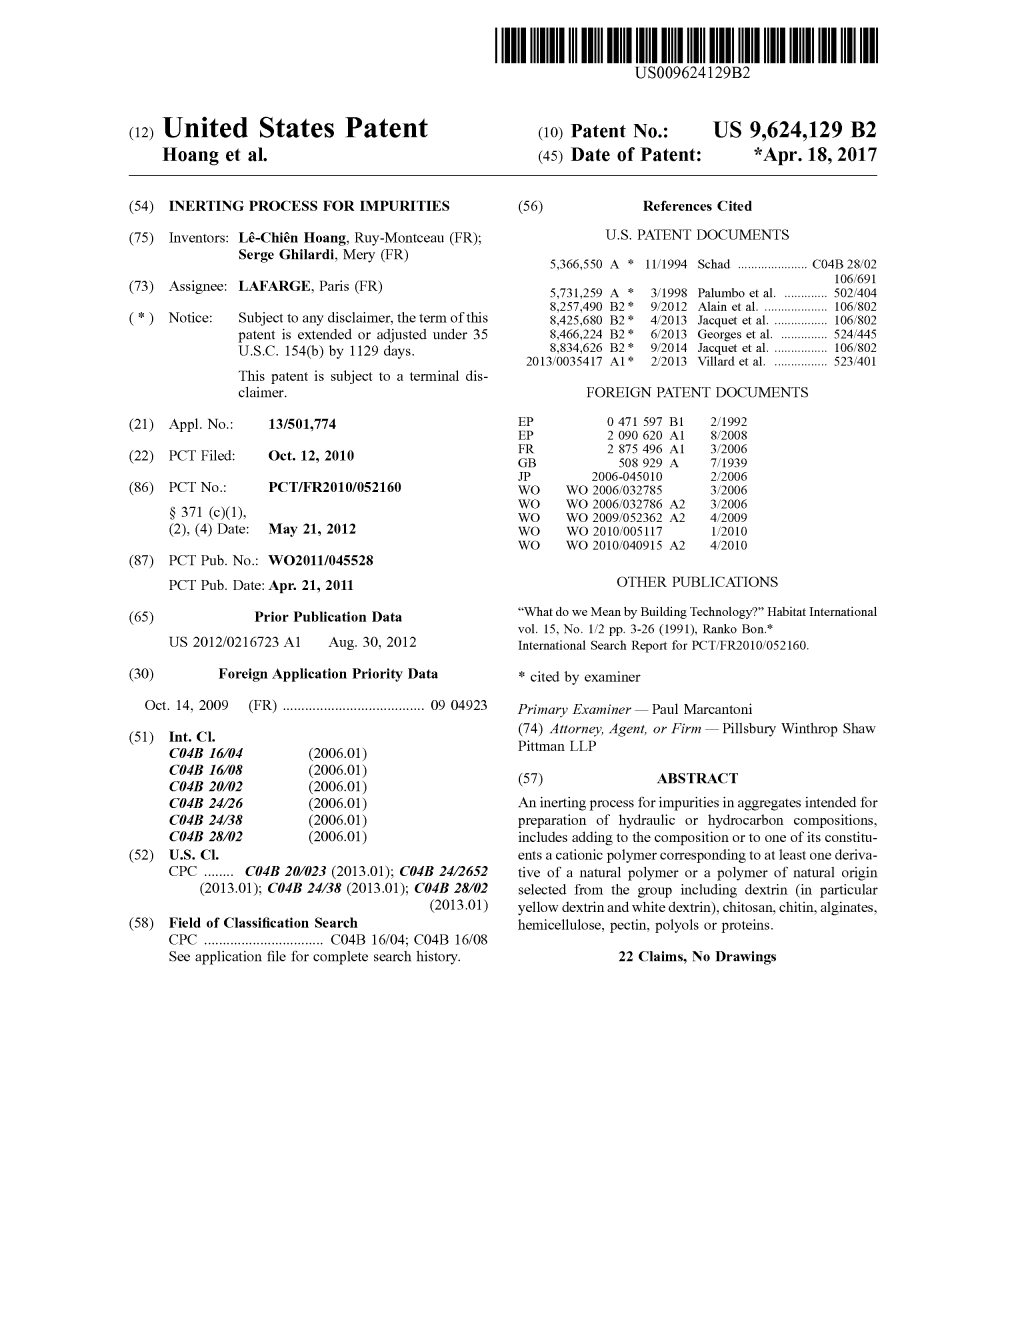 (12) United States Patent (10) Patent No.: US 9,624,129 B2 Hoang Et Al